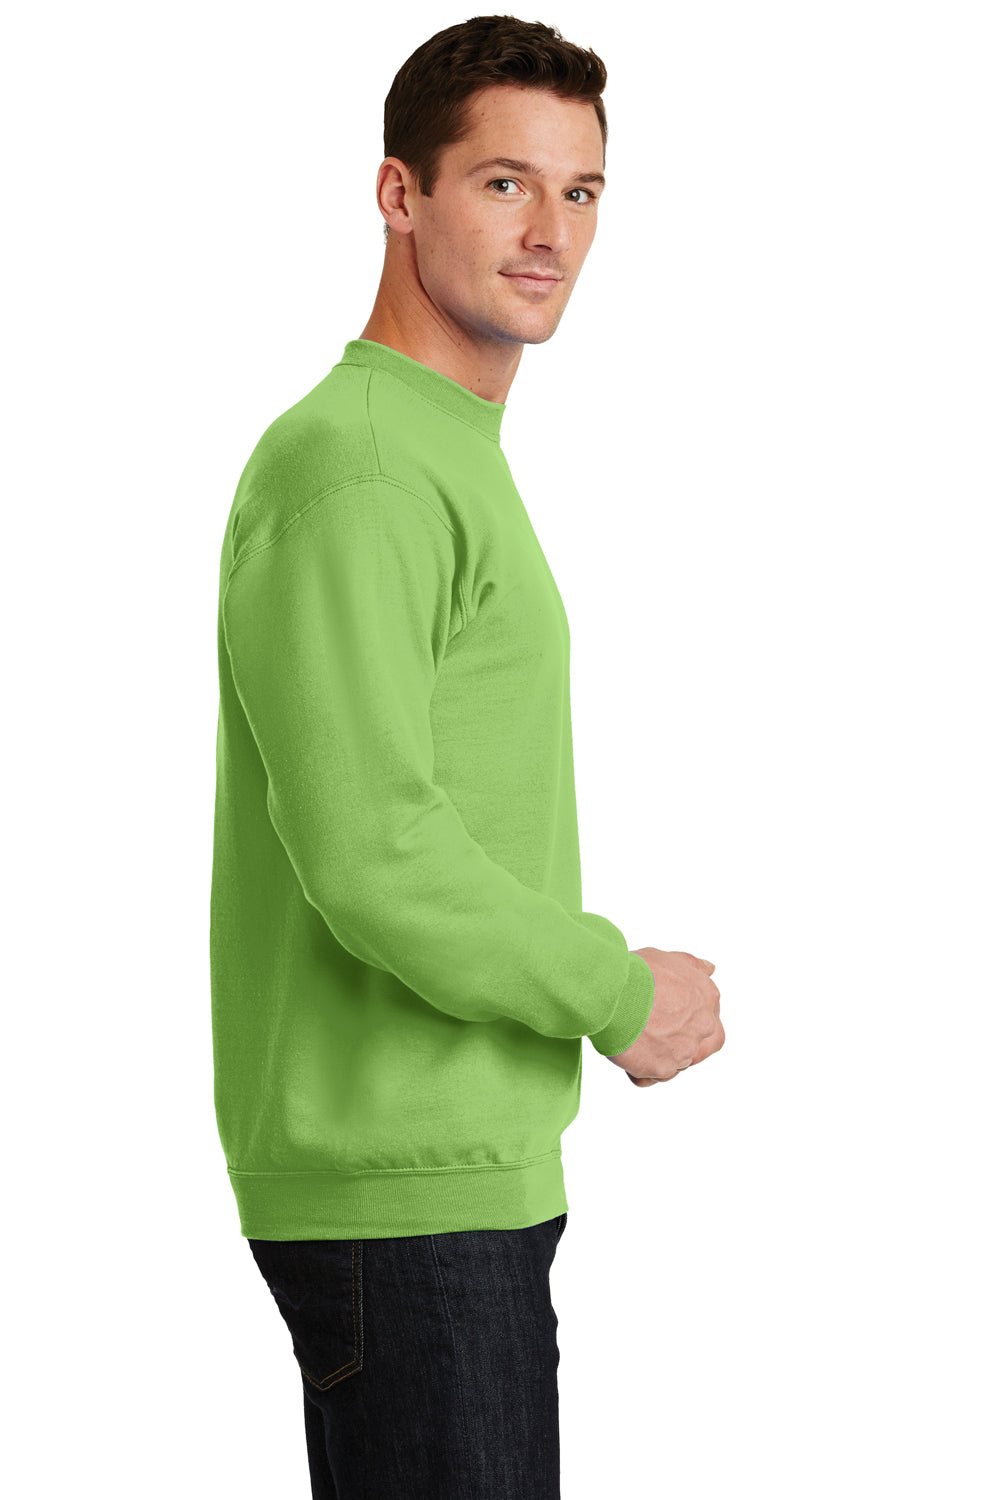 Port & Company PC78 Mens Core Fleece Crewneck Sweatshirt Lime Green Side